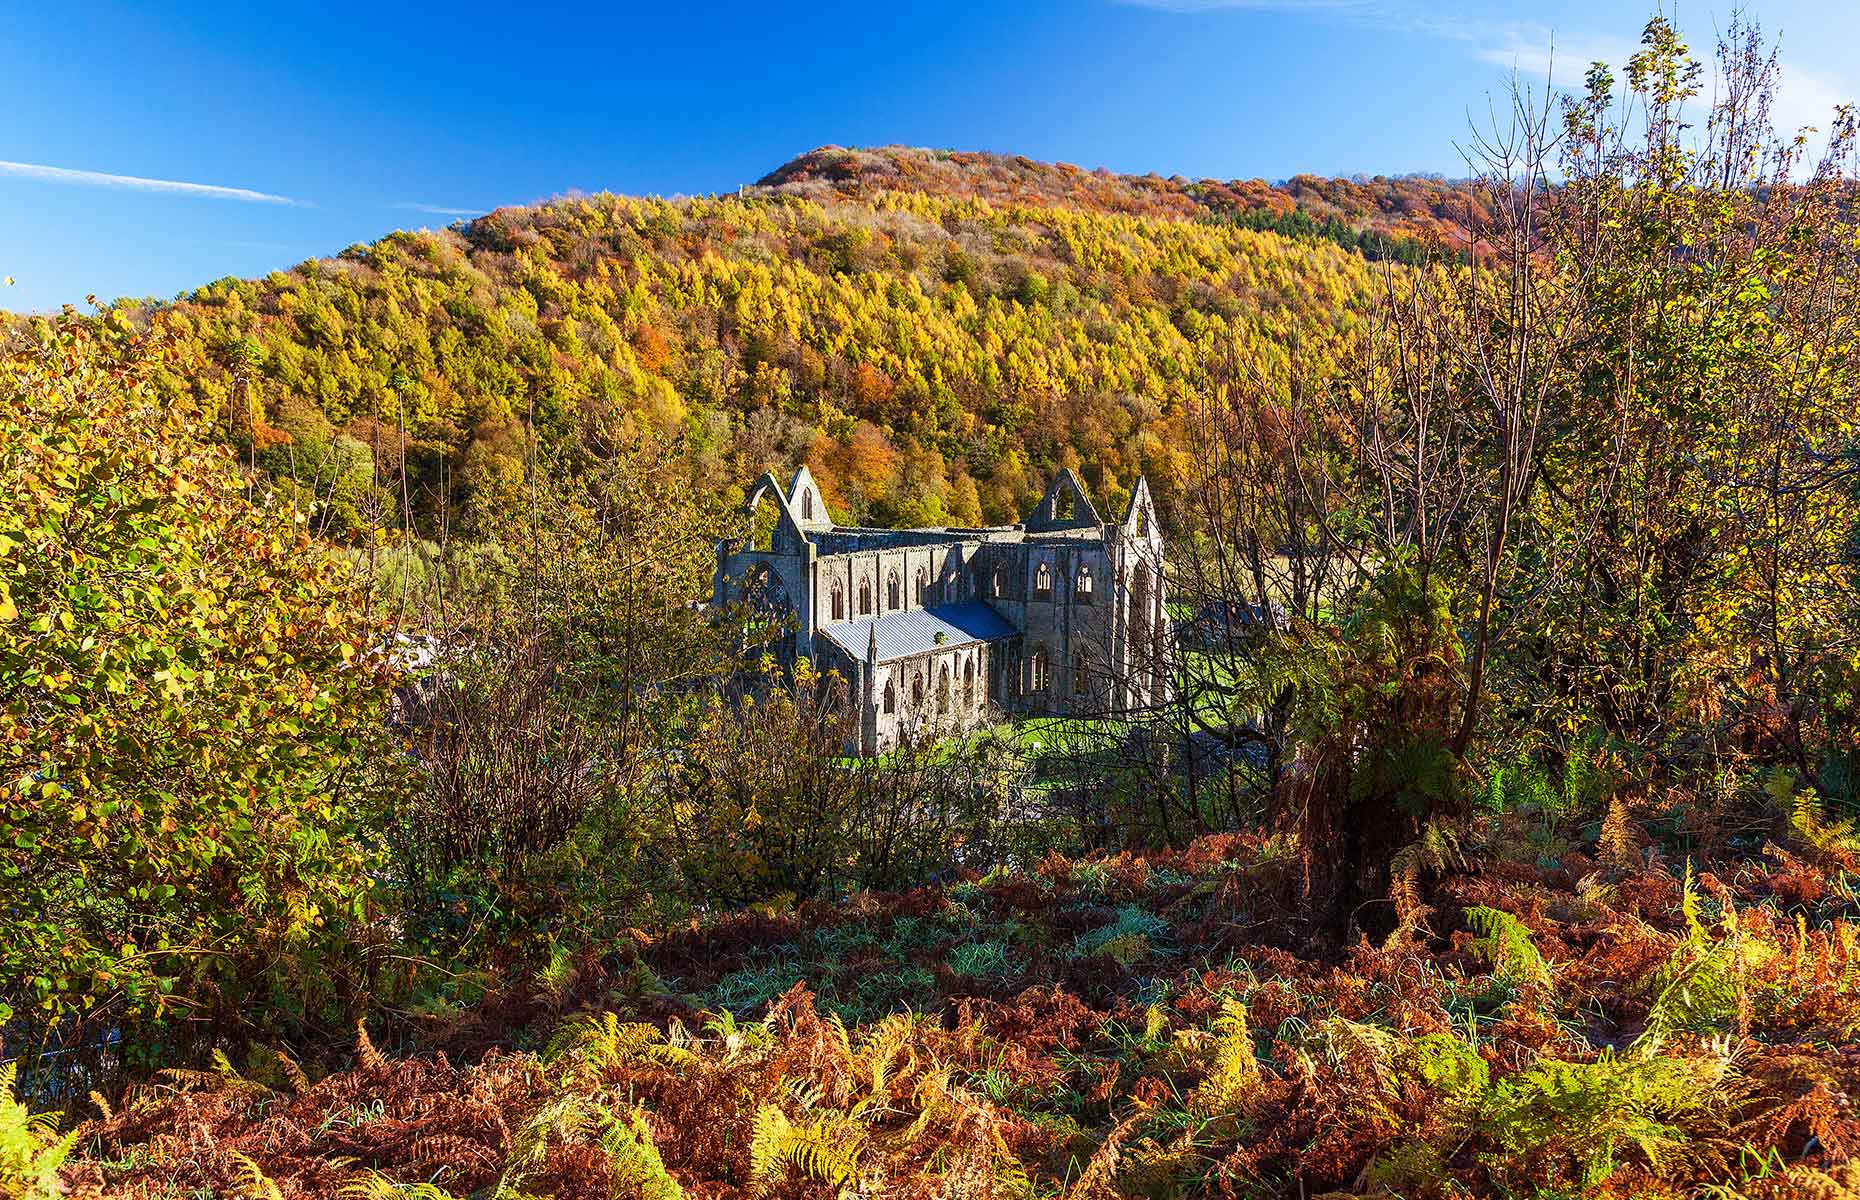 Tintern Abbey, Wye Valley, Wales (Image: Billy Stock/Shutterstock)